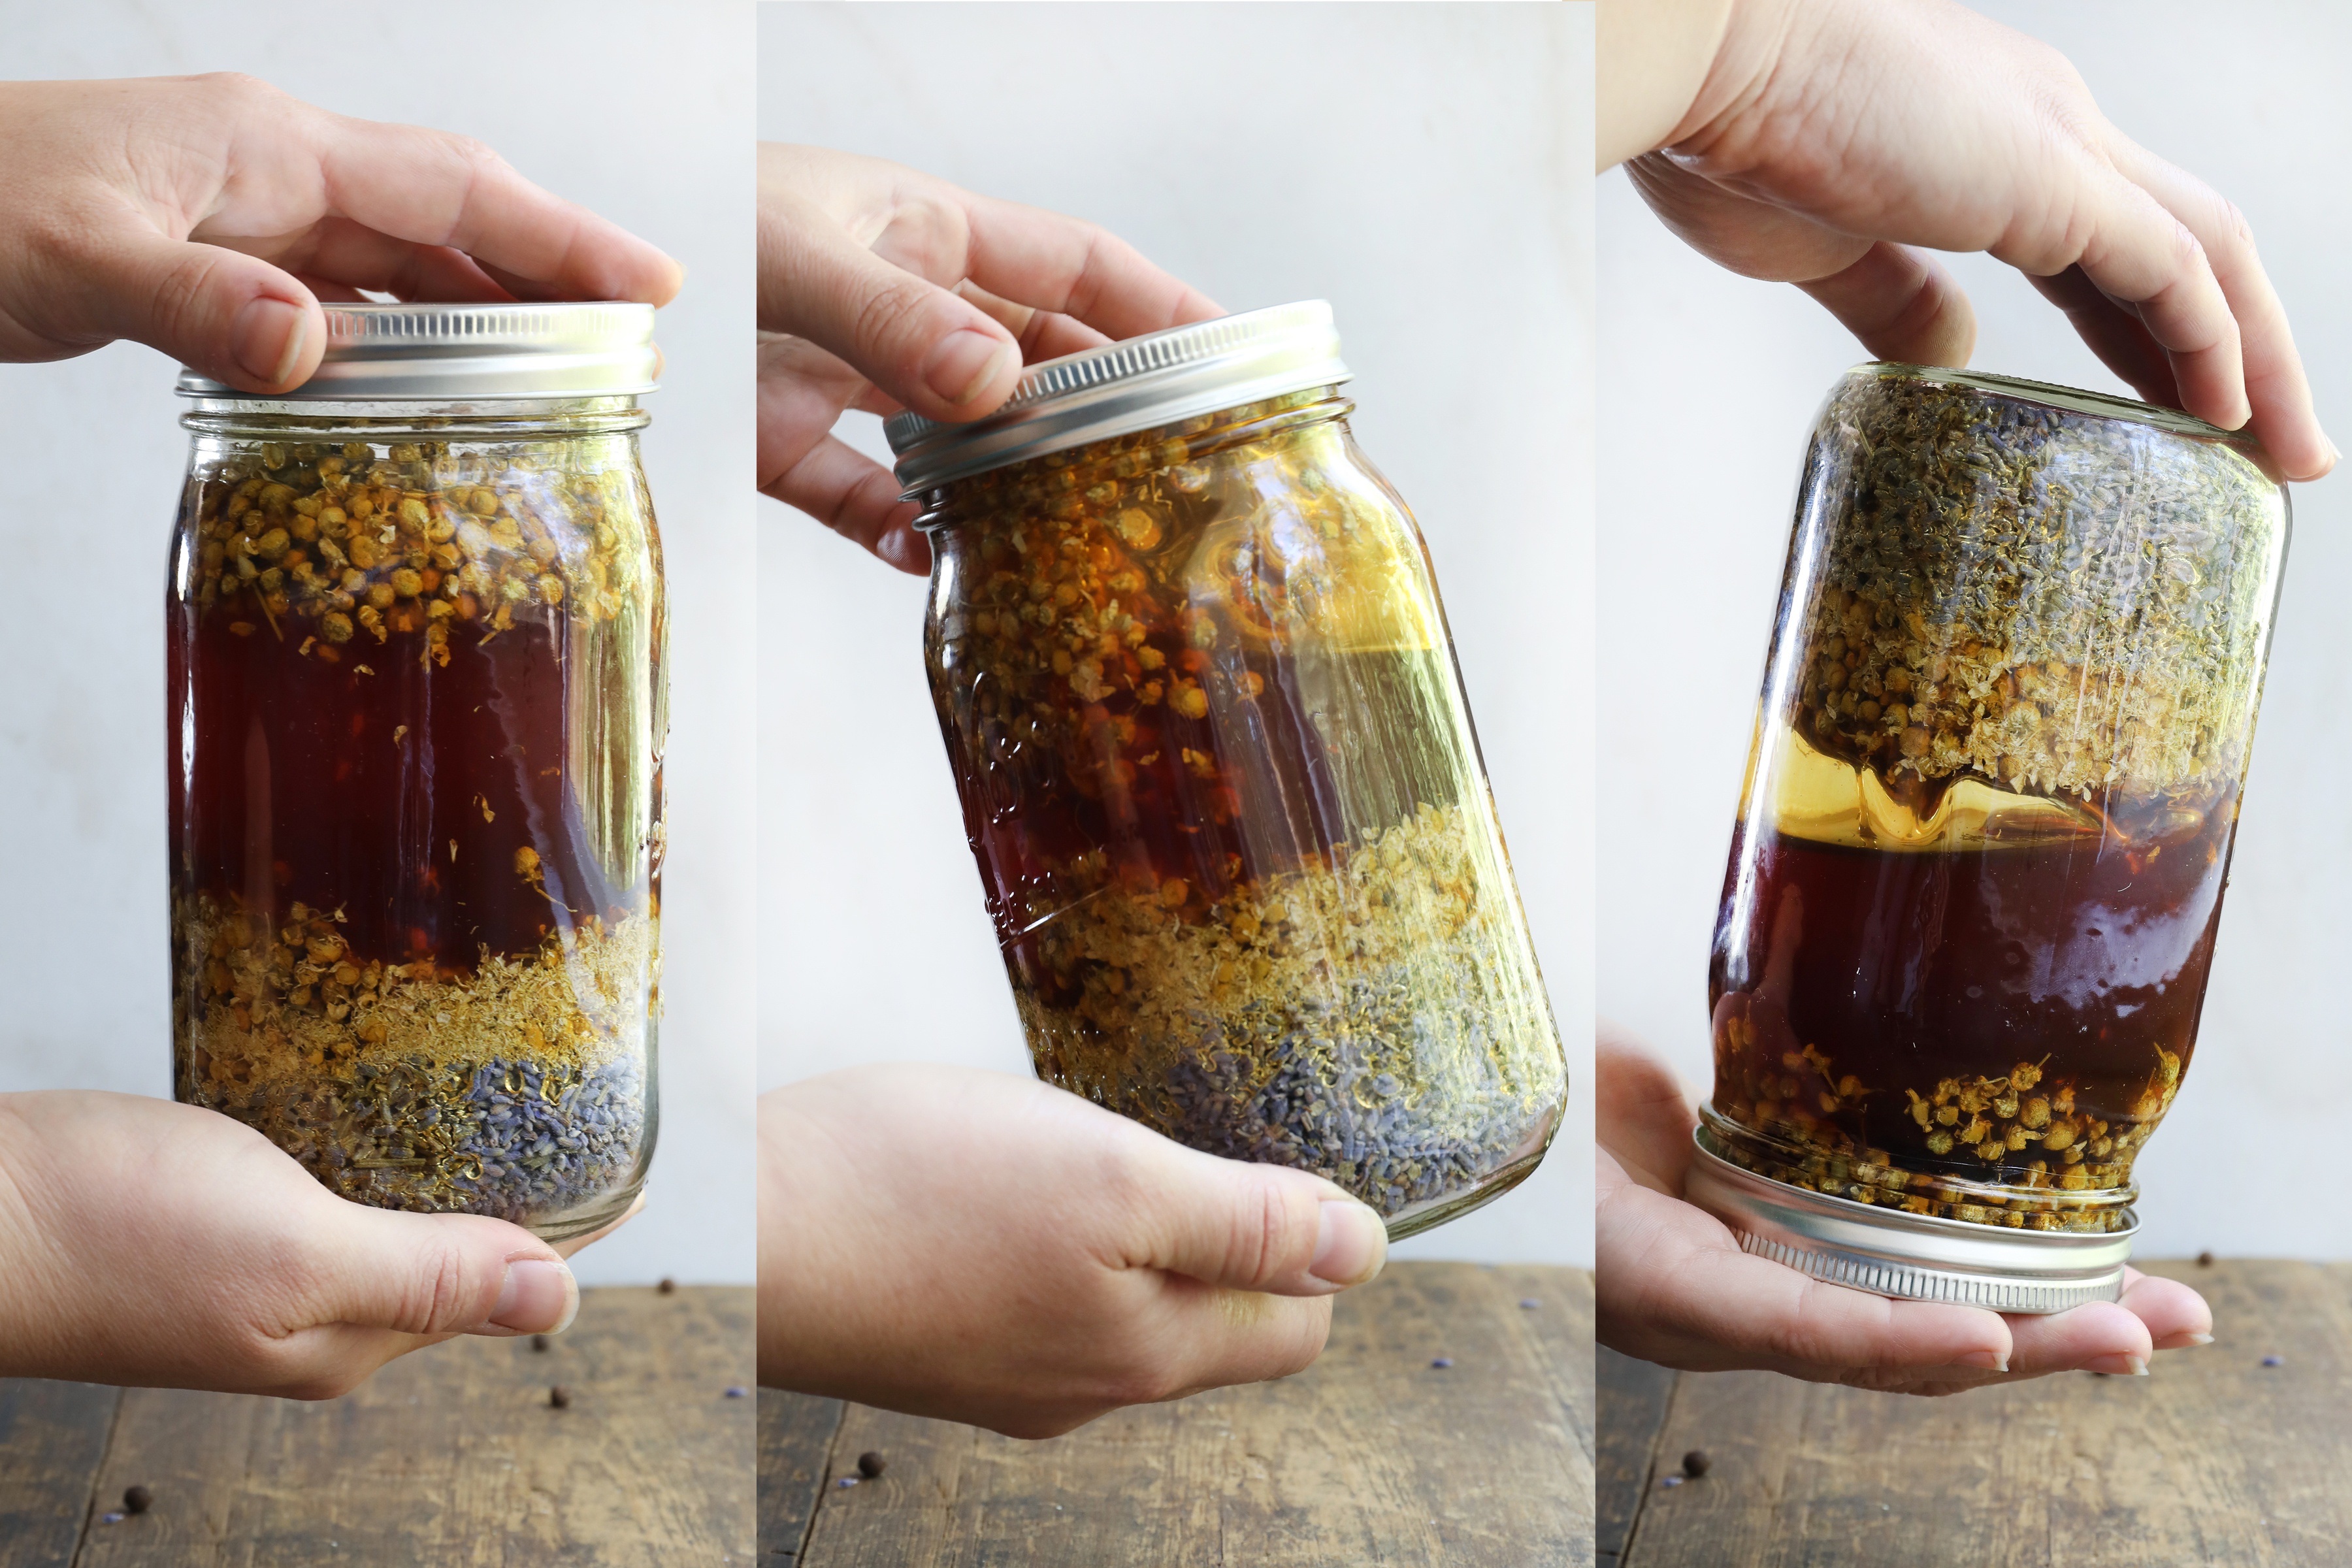 Hands flipping mason jar to mix honey and herbs